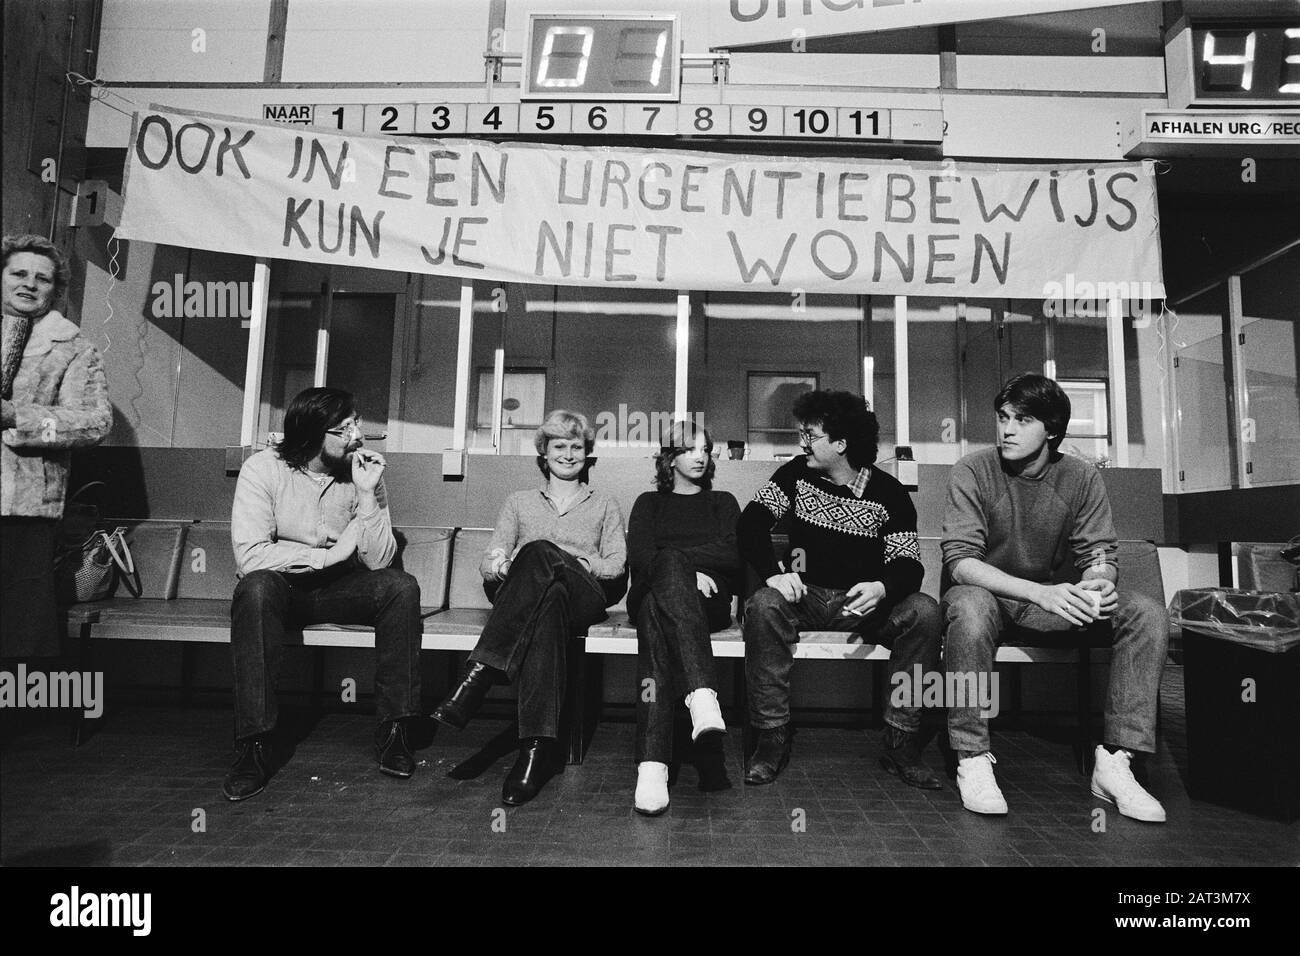 Work interruption officials Municipal Housing Service in Amsterdam Date: February 12, 1980 Location: Amsterdam, Noord-Holland Keywords: OFFICIALS, work breaks Stock Photo